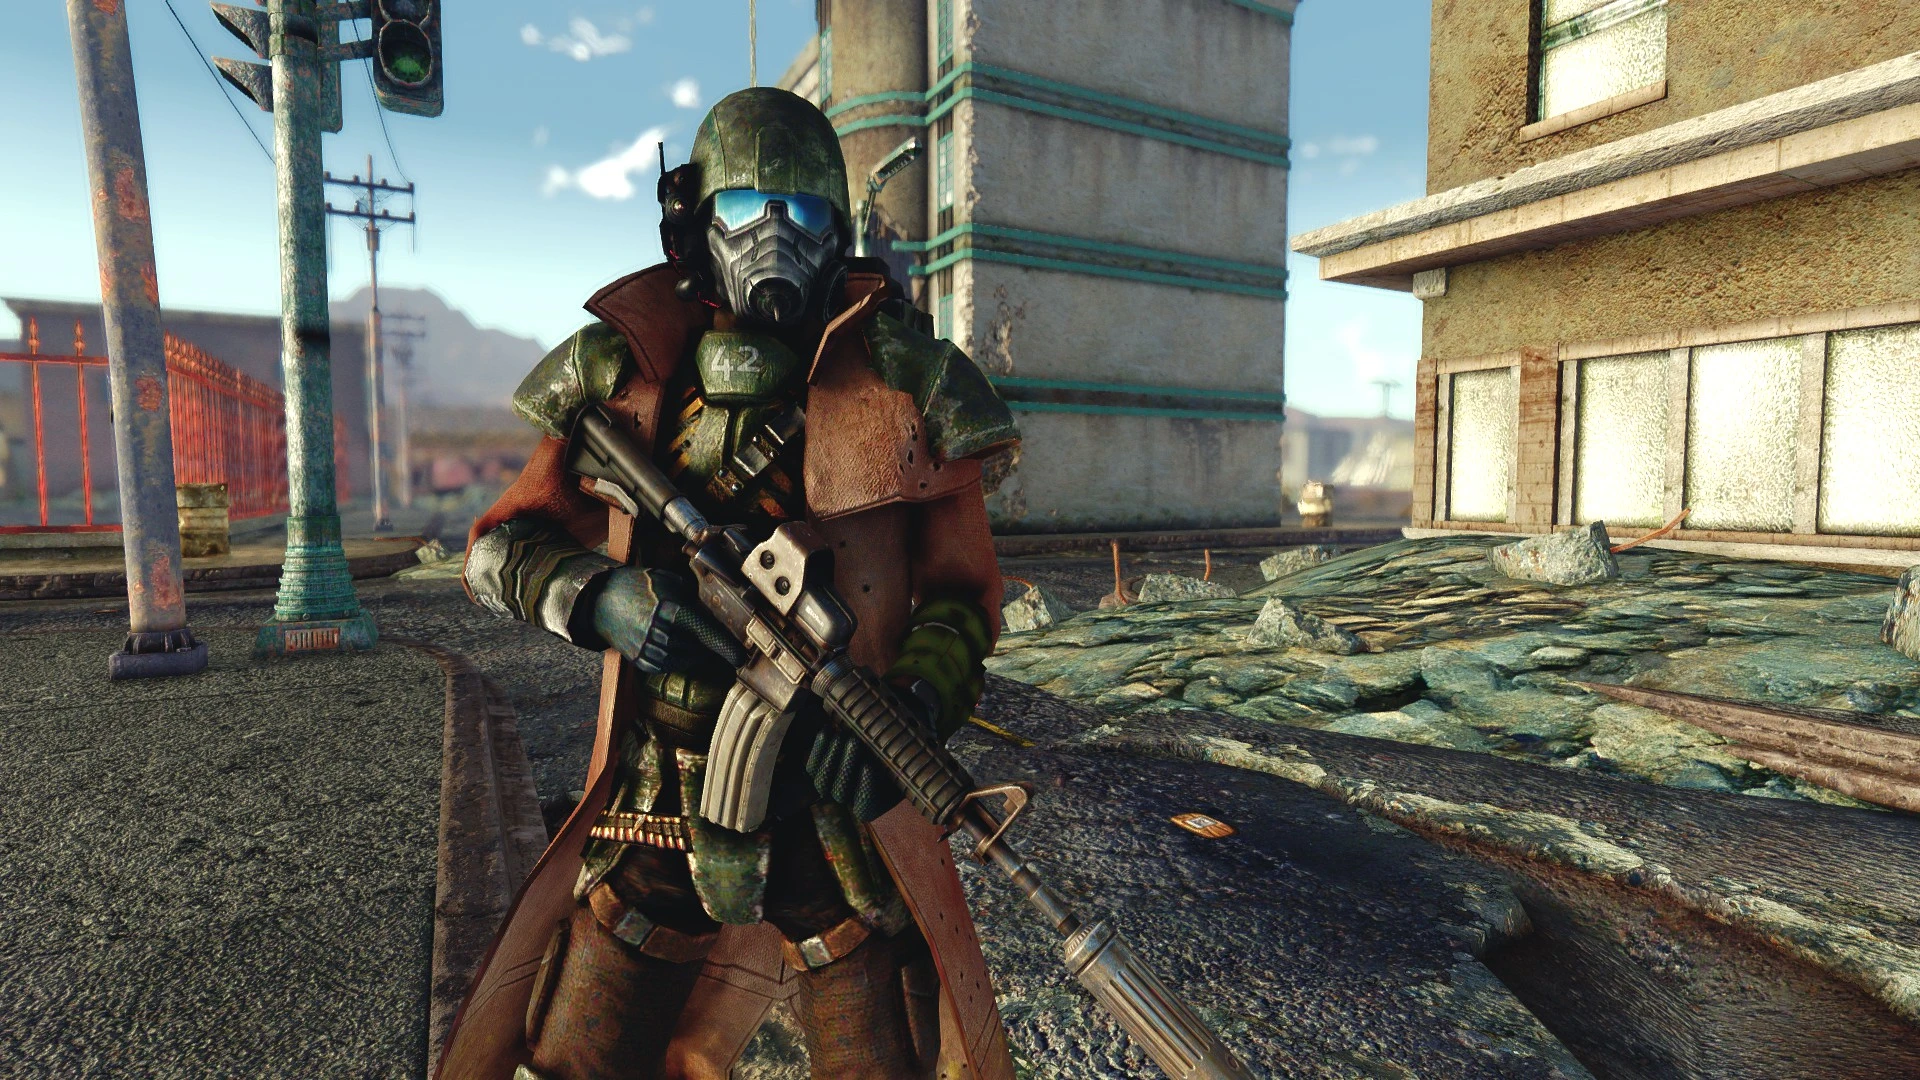 More Miranda at Fallout New Vegas - mods and community